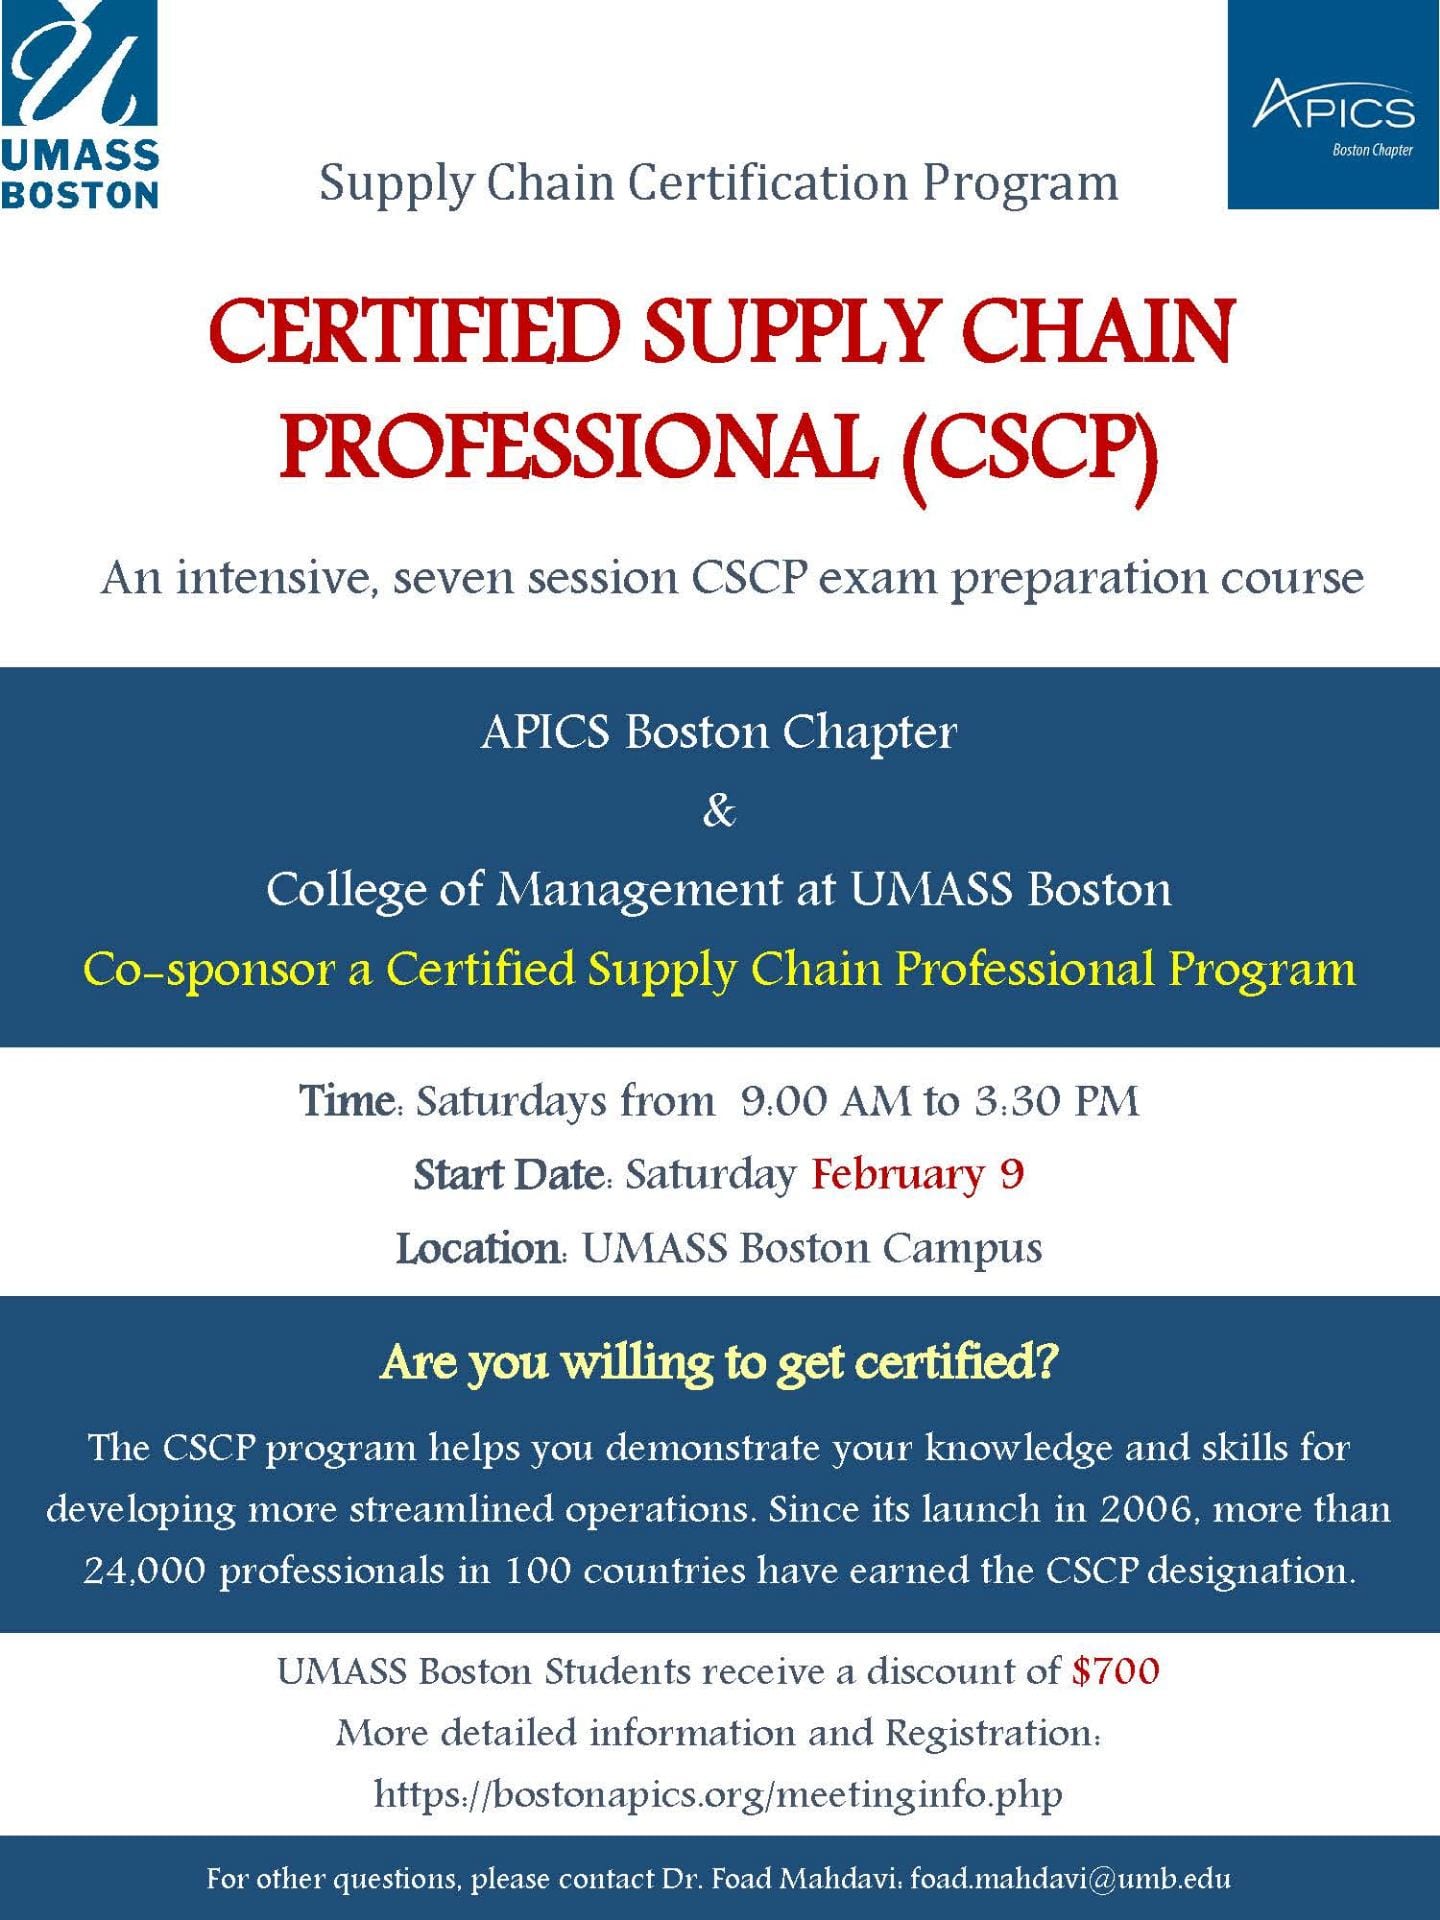 Supply Chain Certification Program at UMass Boston: CERTIFIED SUPPLY